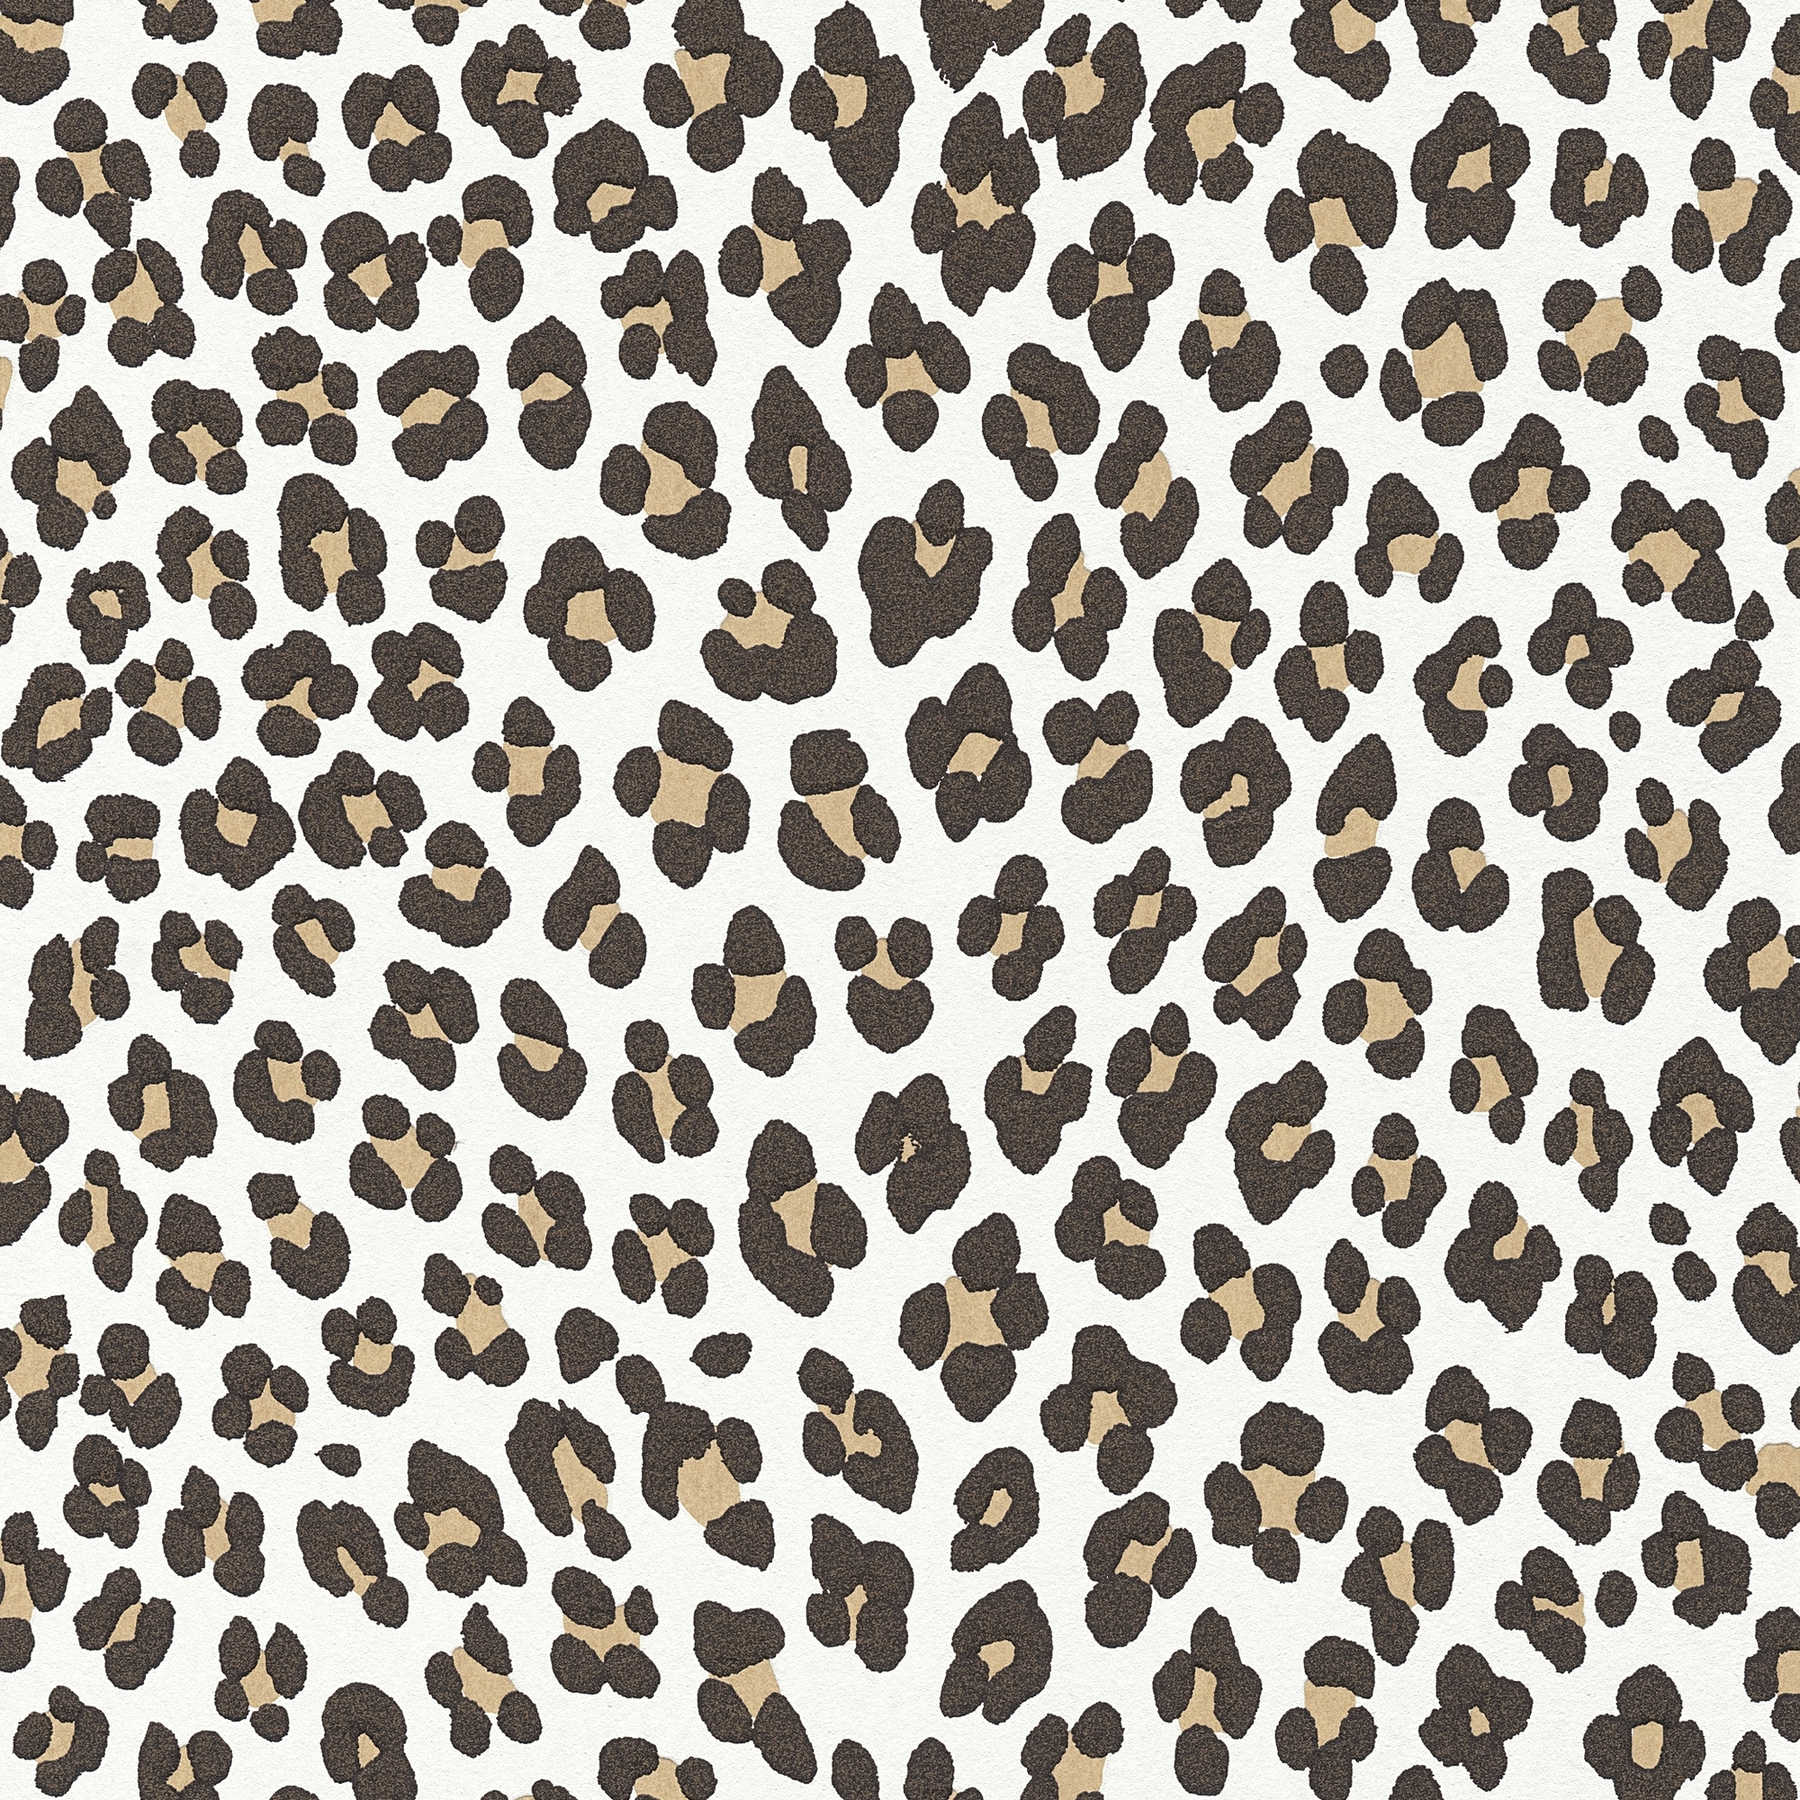         Animal print wallpaper with leopard pattern - Brown, Metallic
    